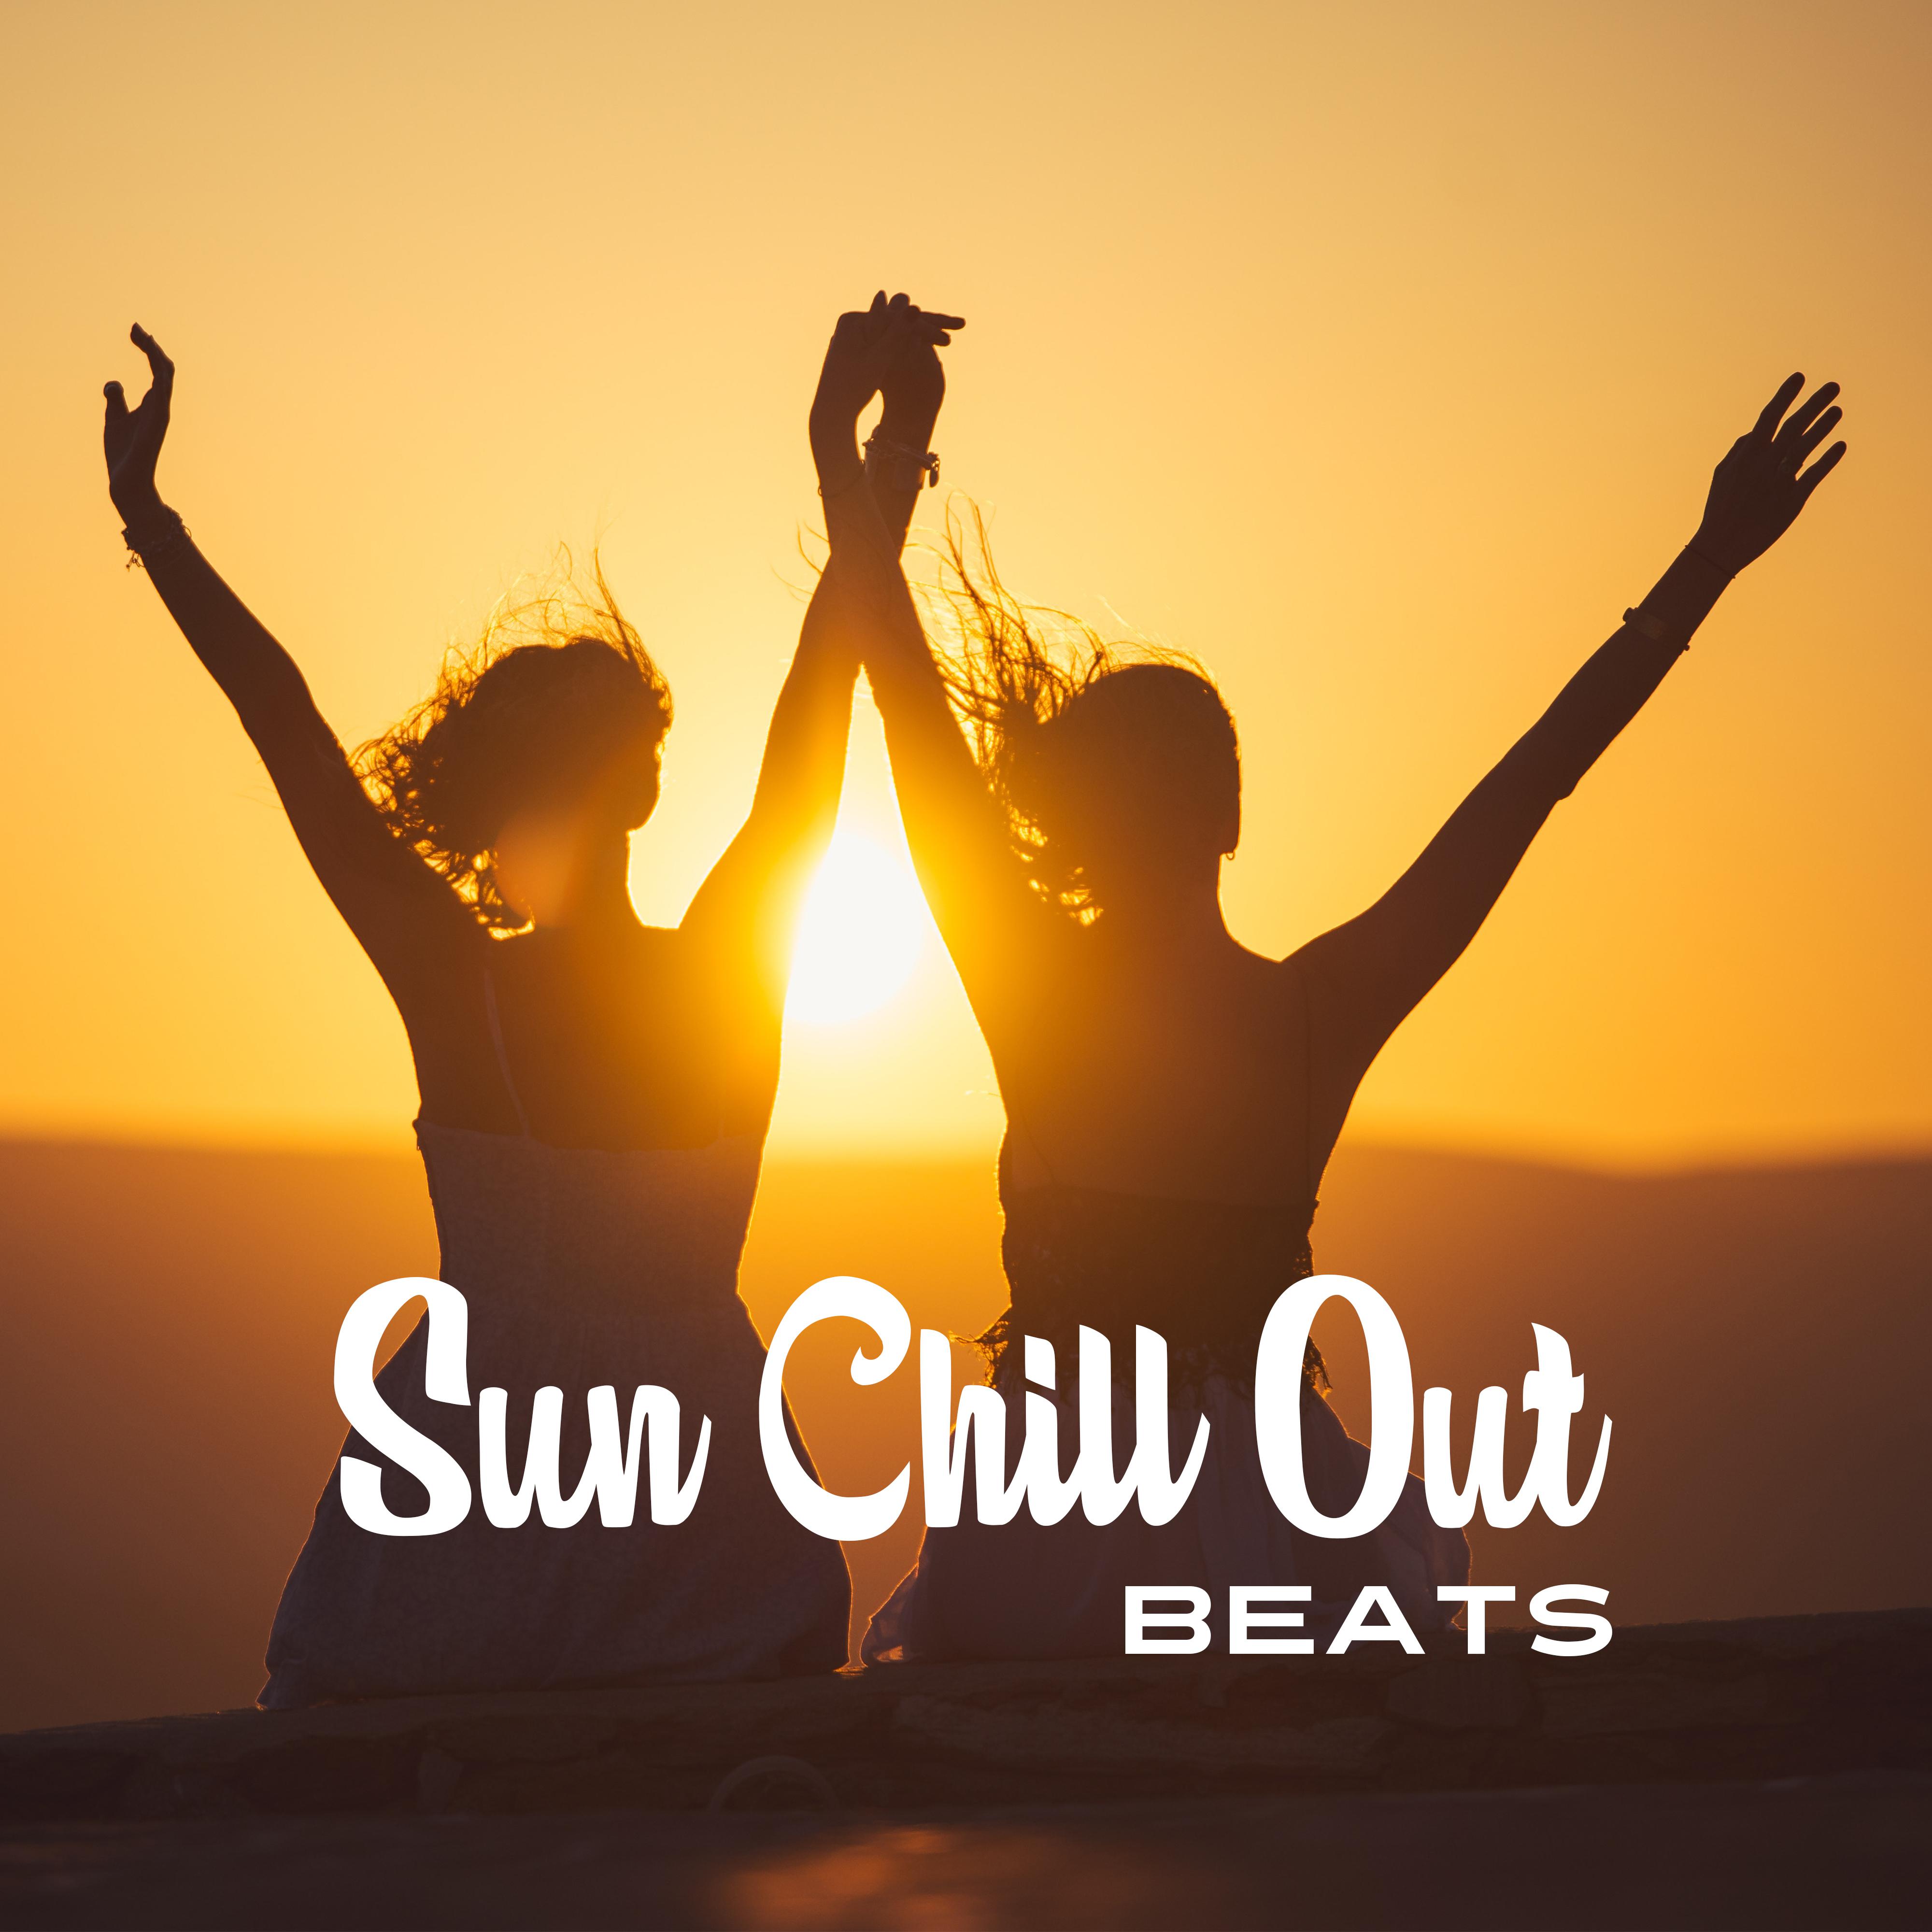 Sun Chill Out Beats